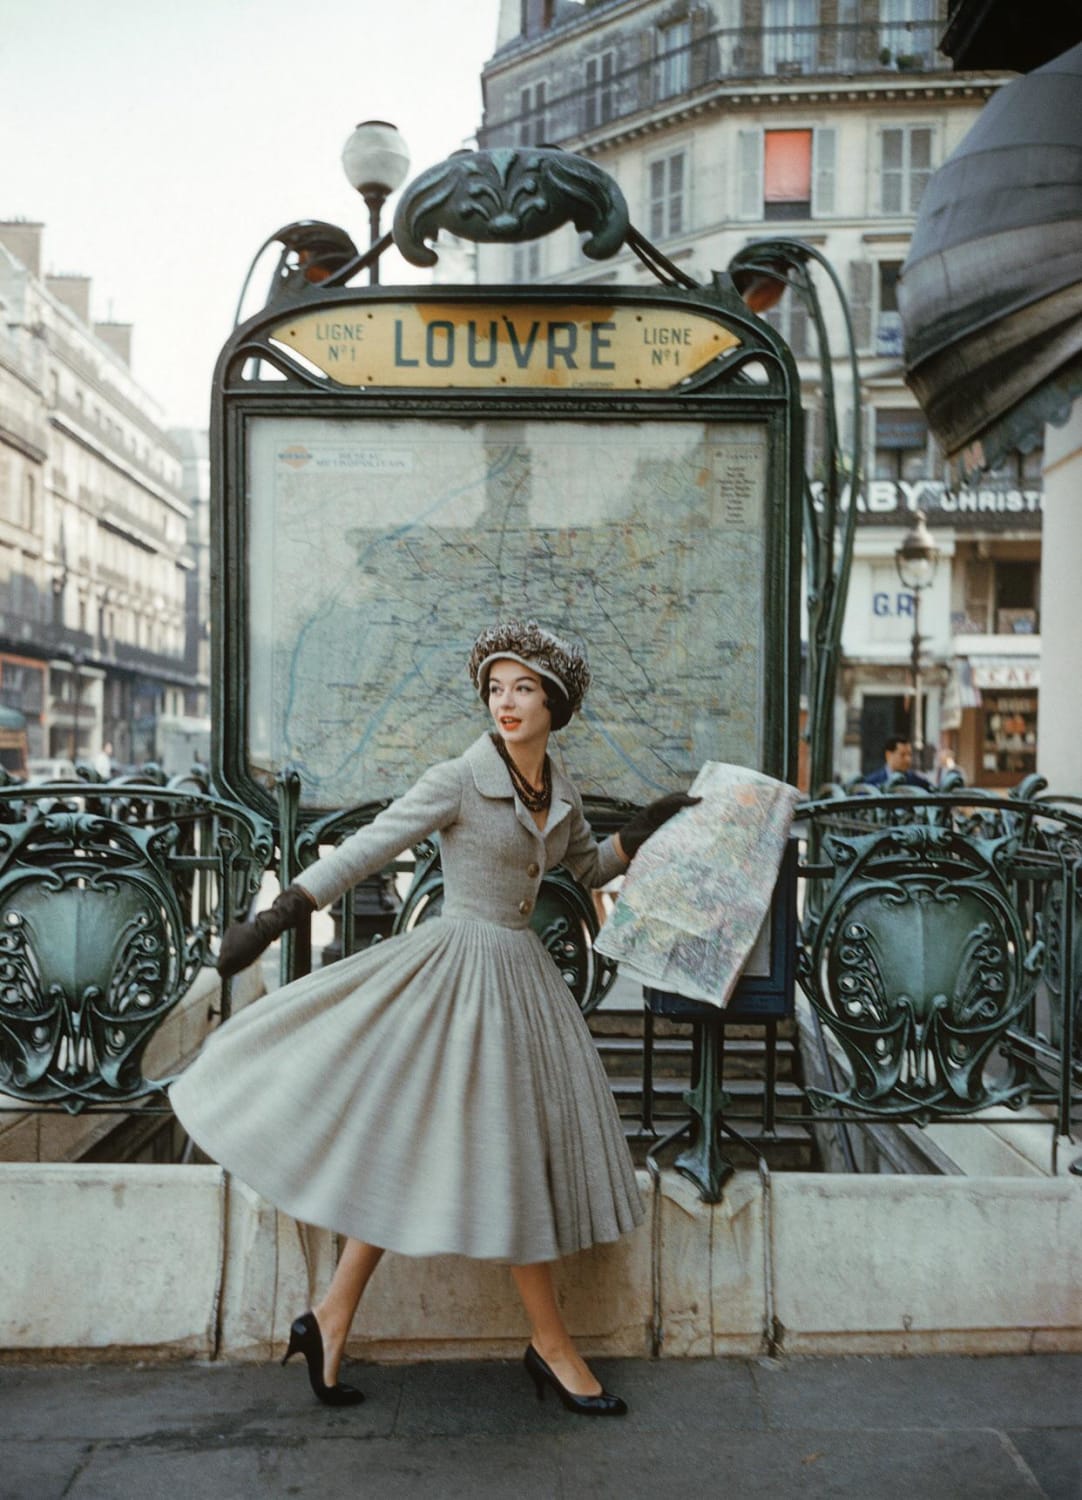 Paris Fashion, 1957